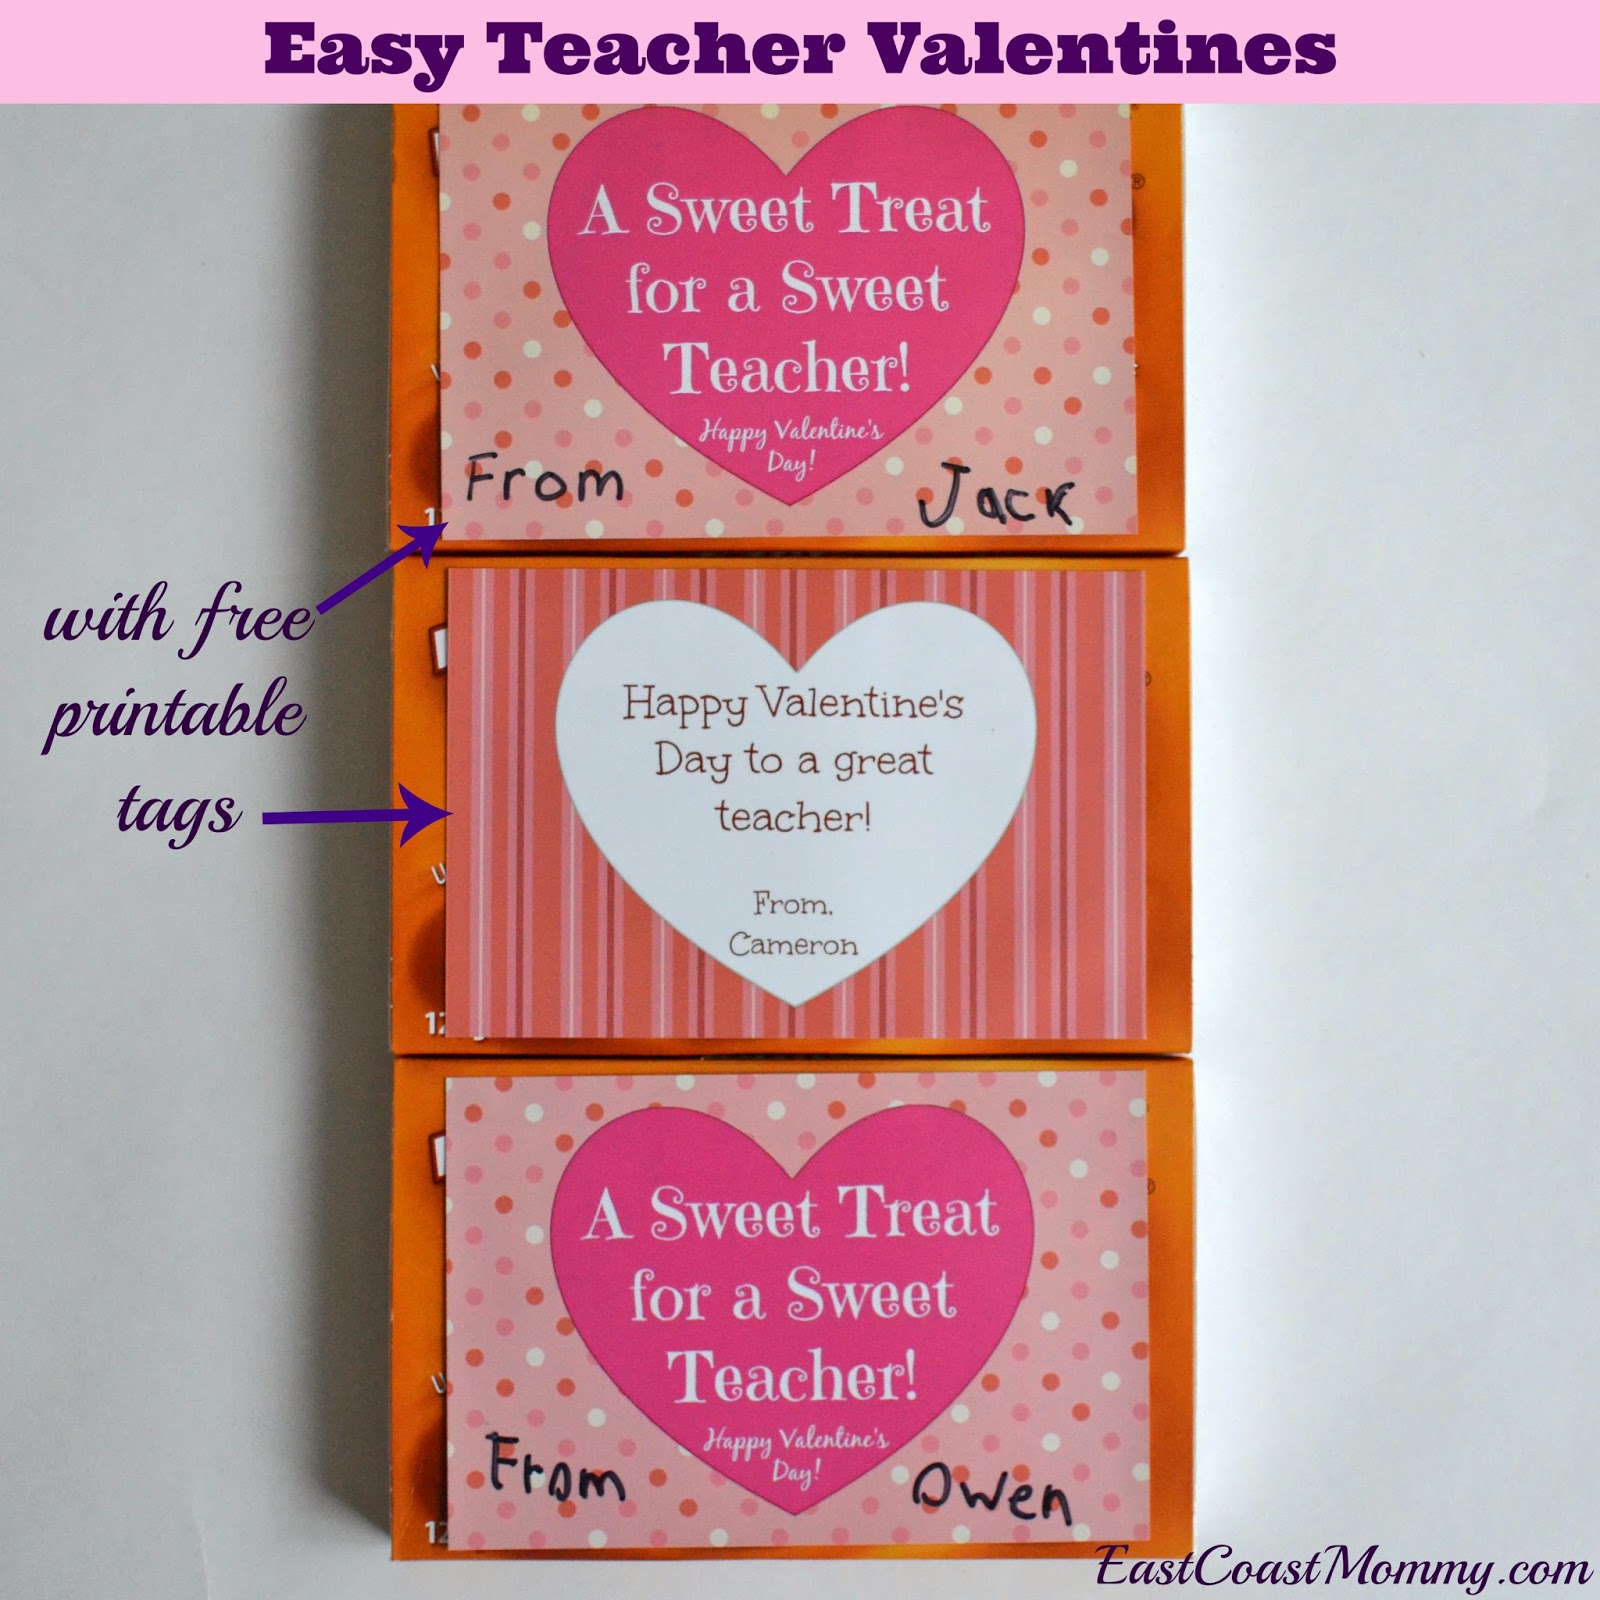 East Coast Mommy: Last Minute Teacher Valentines {with free printable tags}